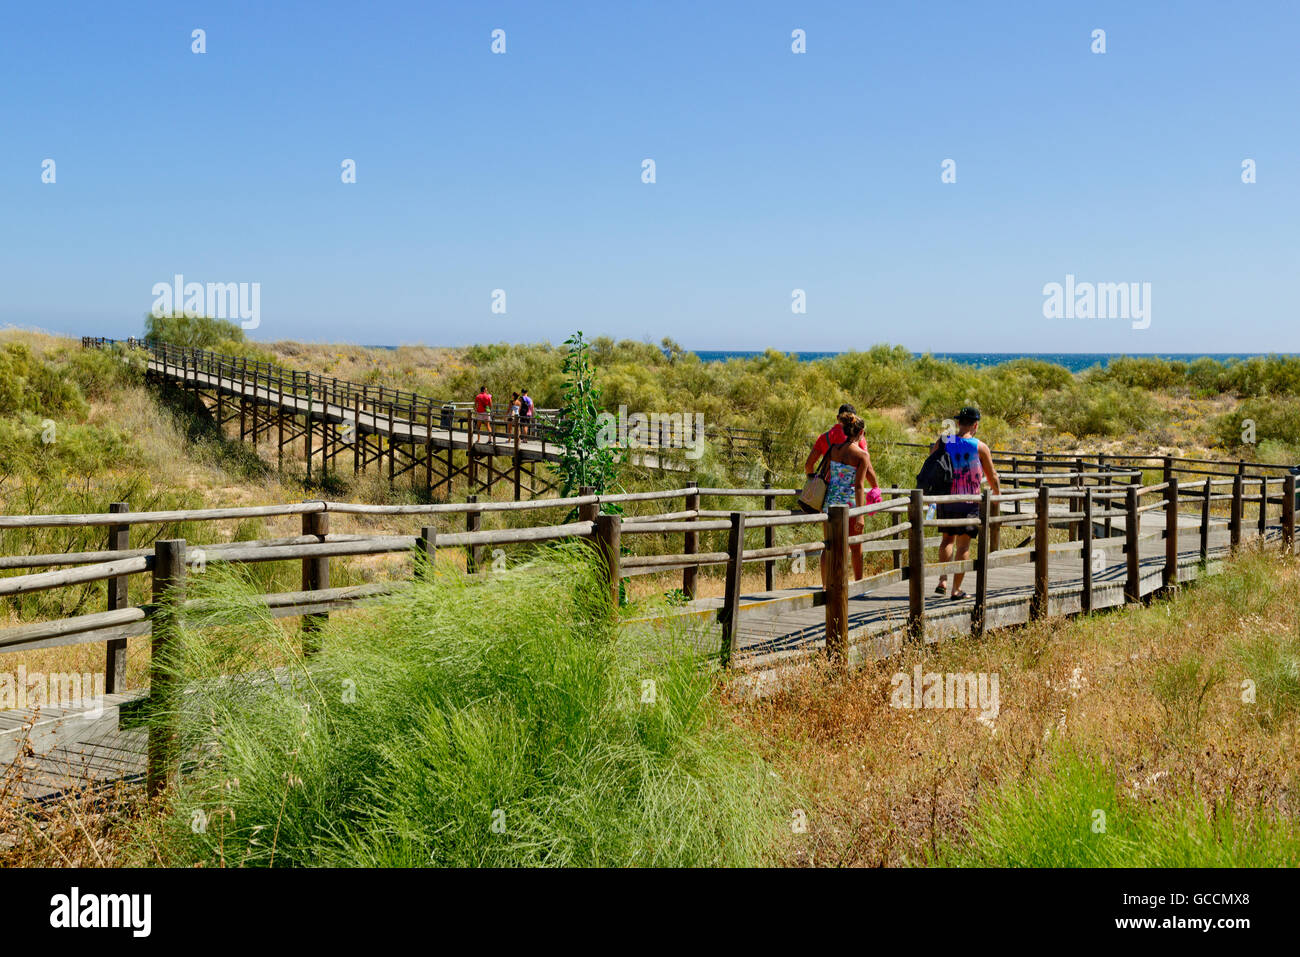 Portugal, Algarve, Monte Gordo, wooden boardwalk walkway over the dunes to the beach Stock Photo